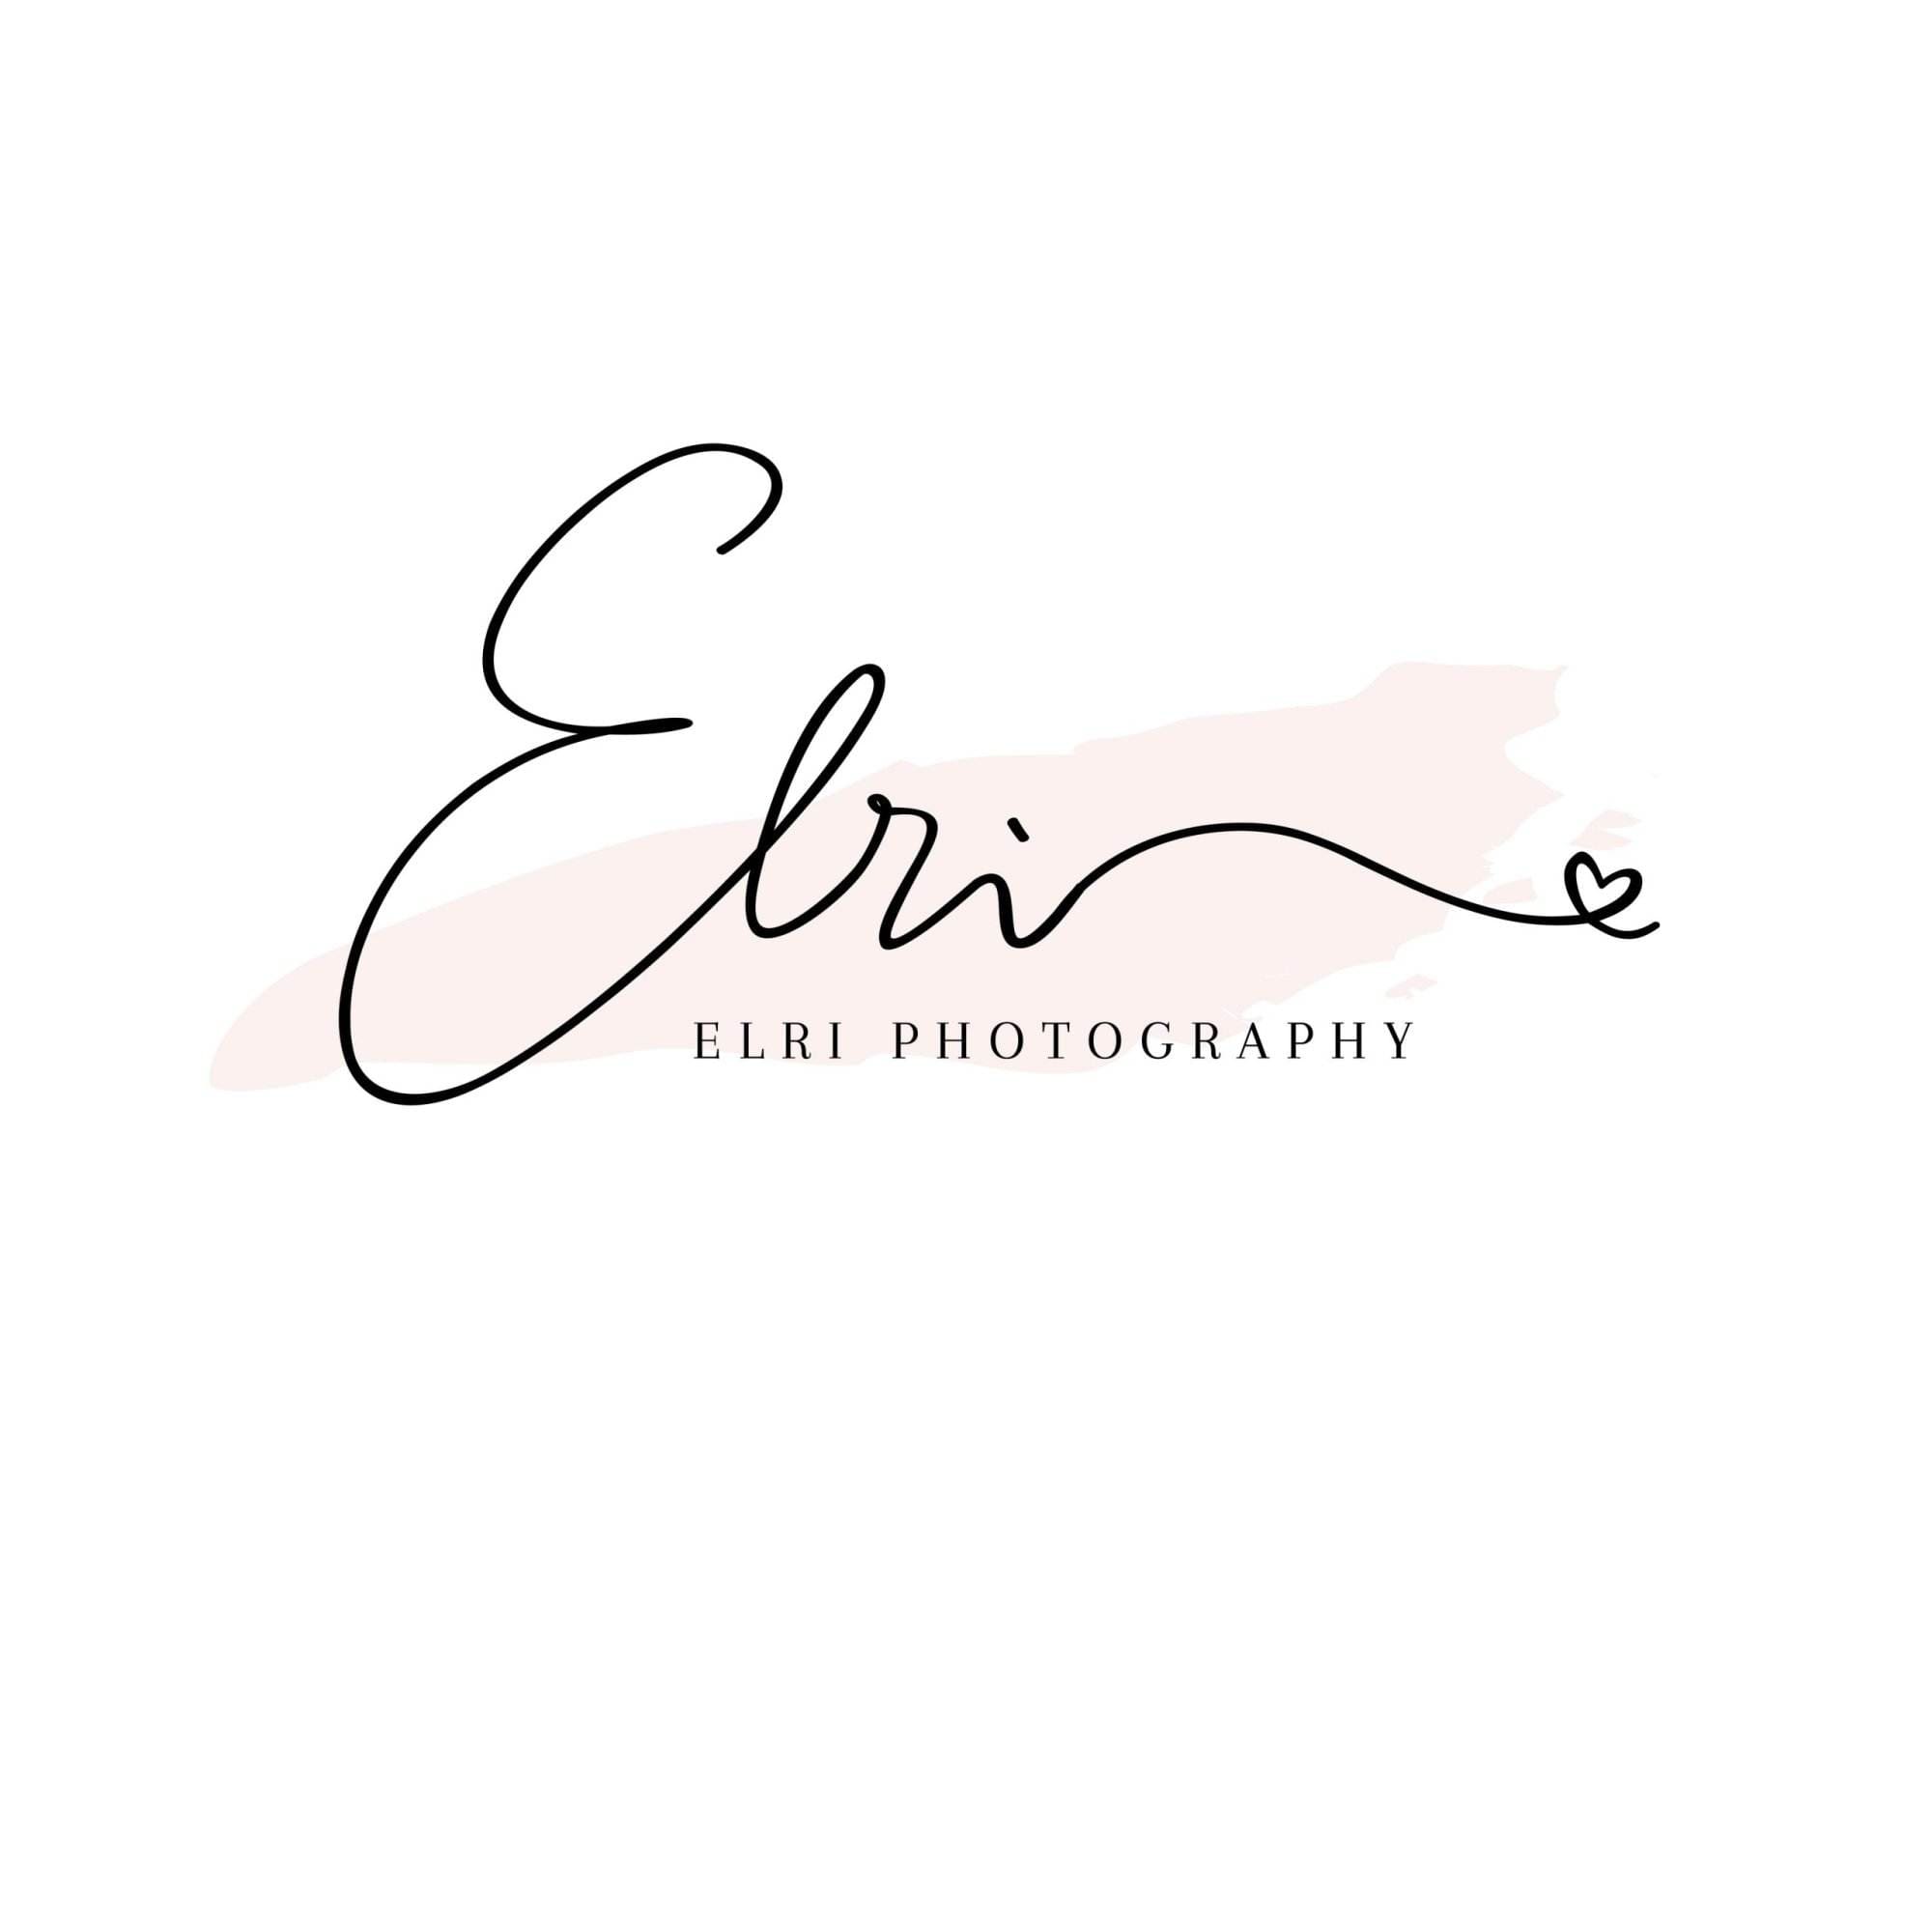 Elri Photography